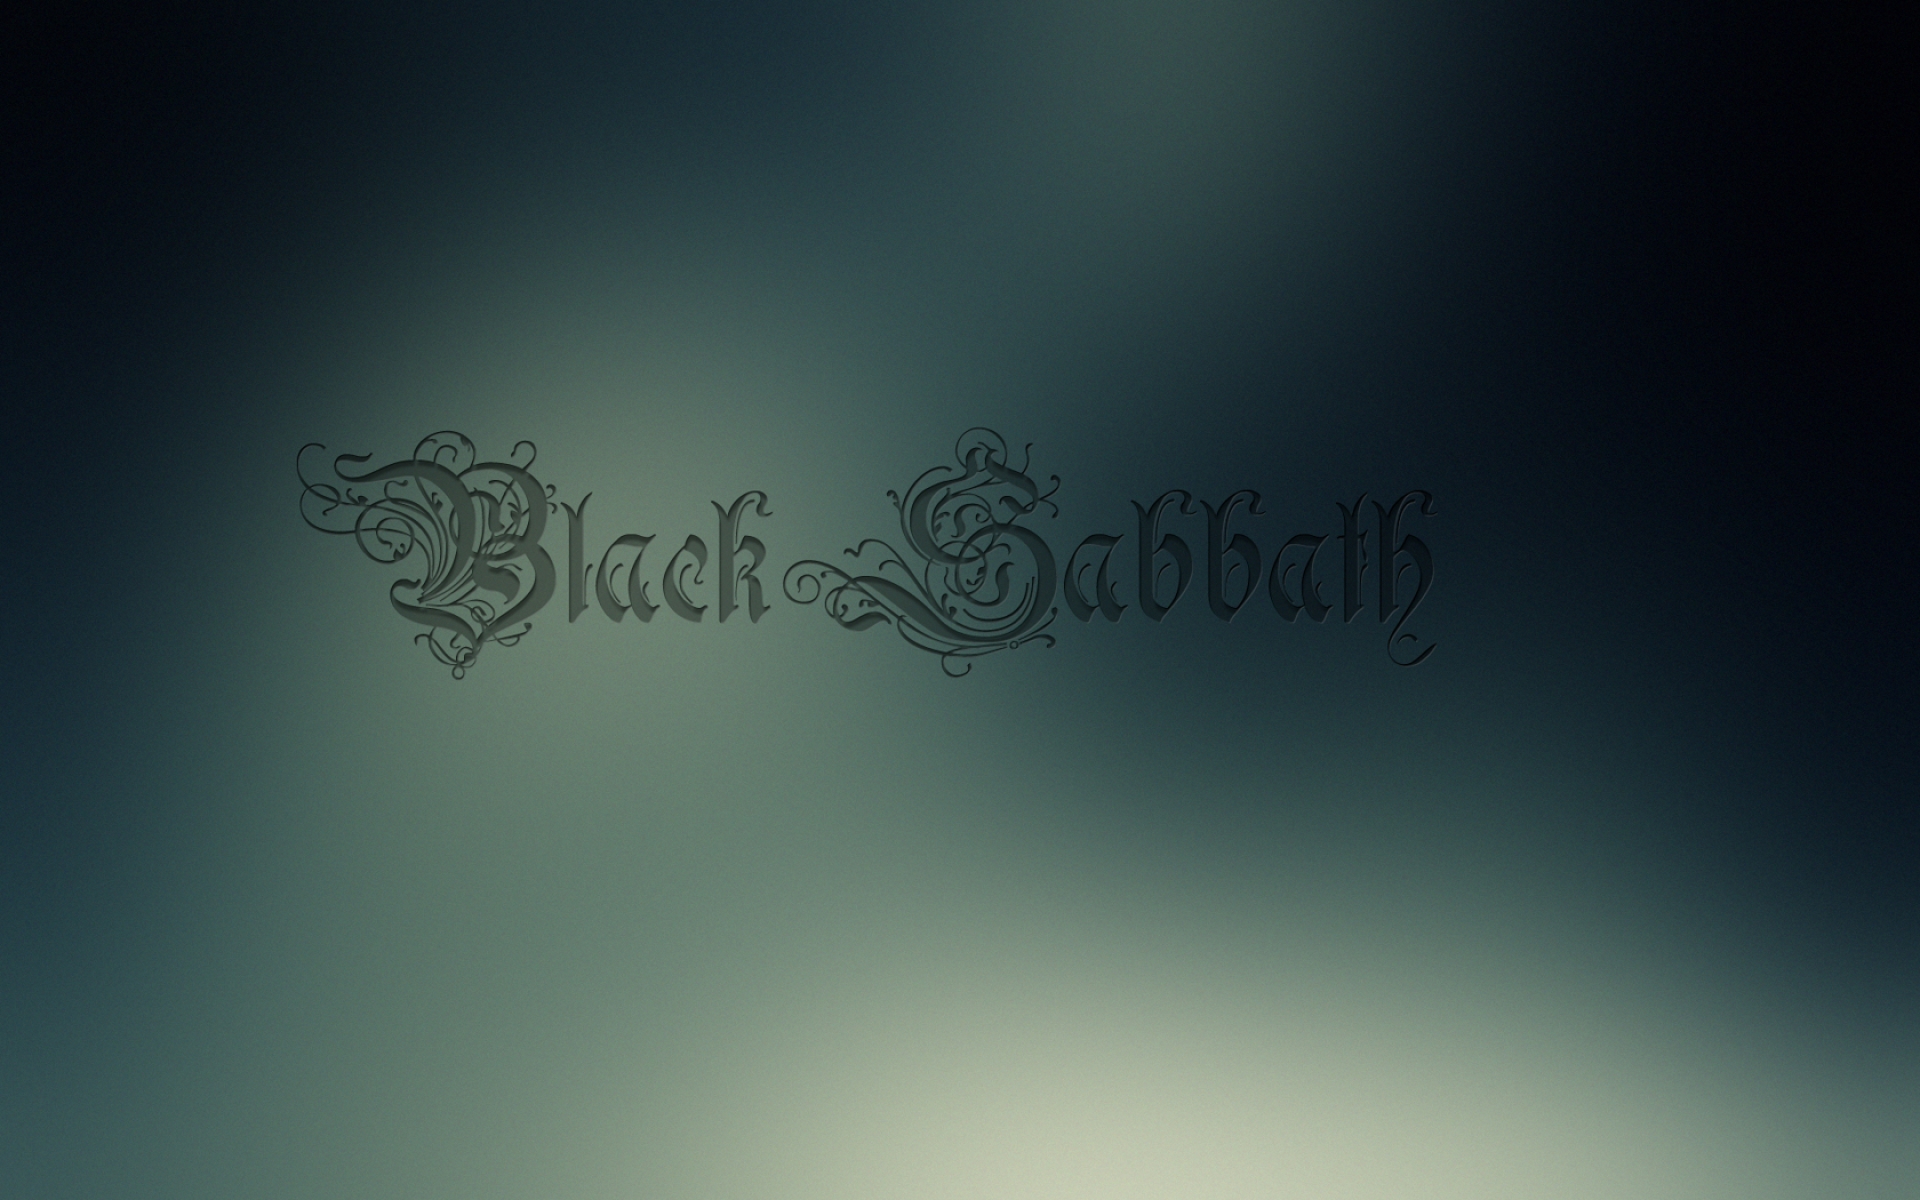 Скачать обои бесплатно Музыка, Тяжелый Металл, Black Sabbath картинка на рабочий стол ПК